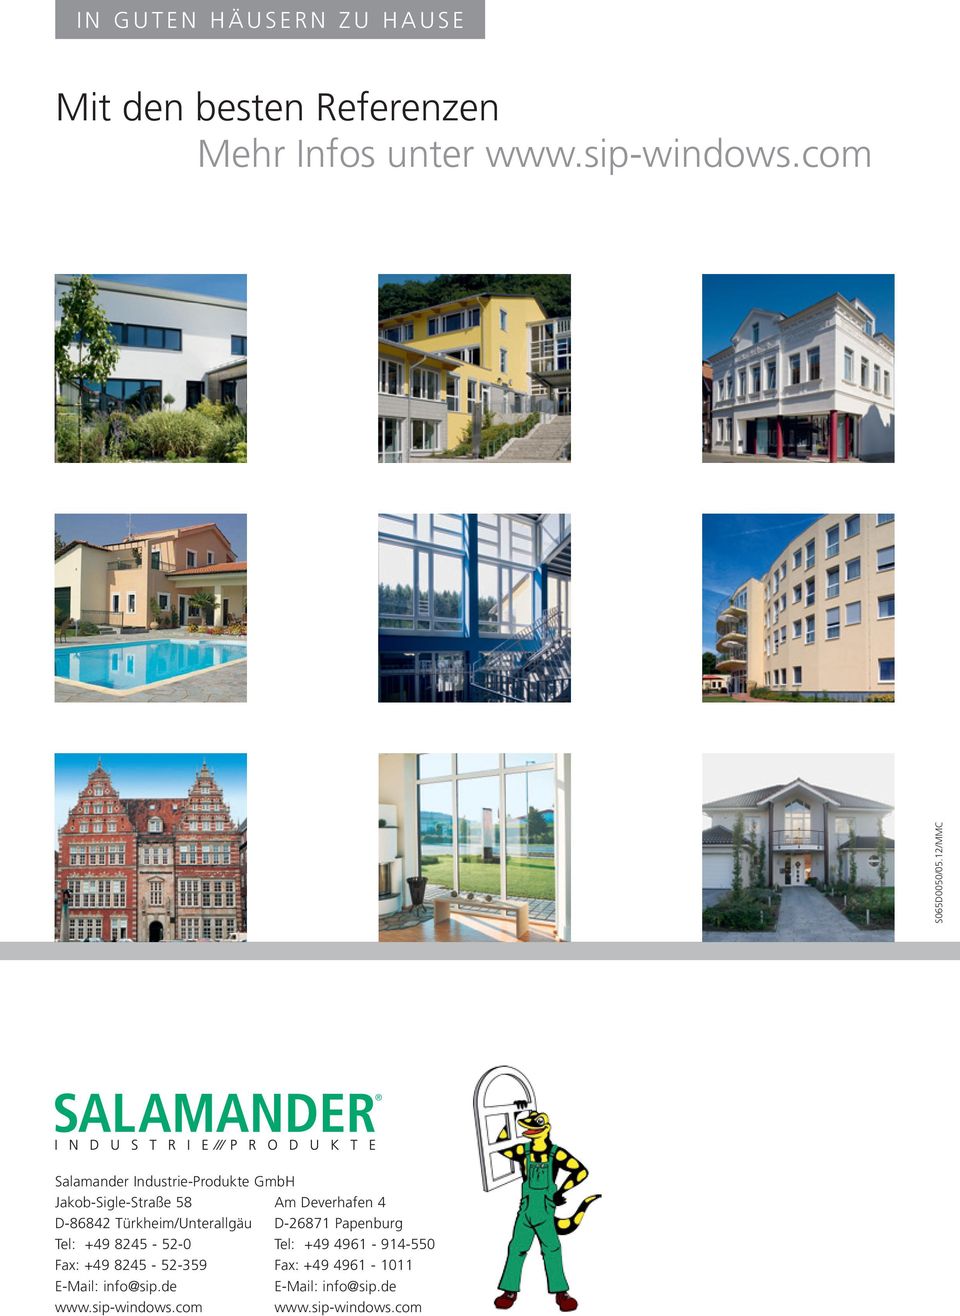 12/MMC Salamander Industrie-Produkte GmbH Jakob-Sigle-Straße 58 Am Deverhafen 4 D-86842 Türkheim/Unterallgäu